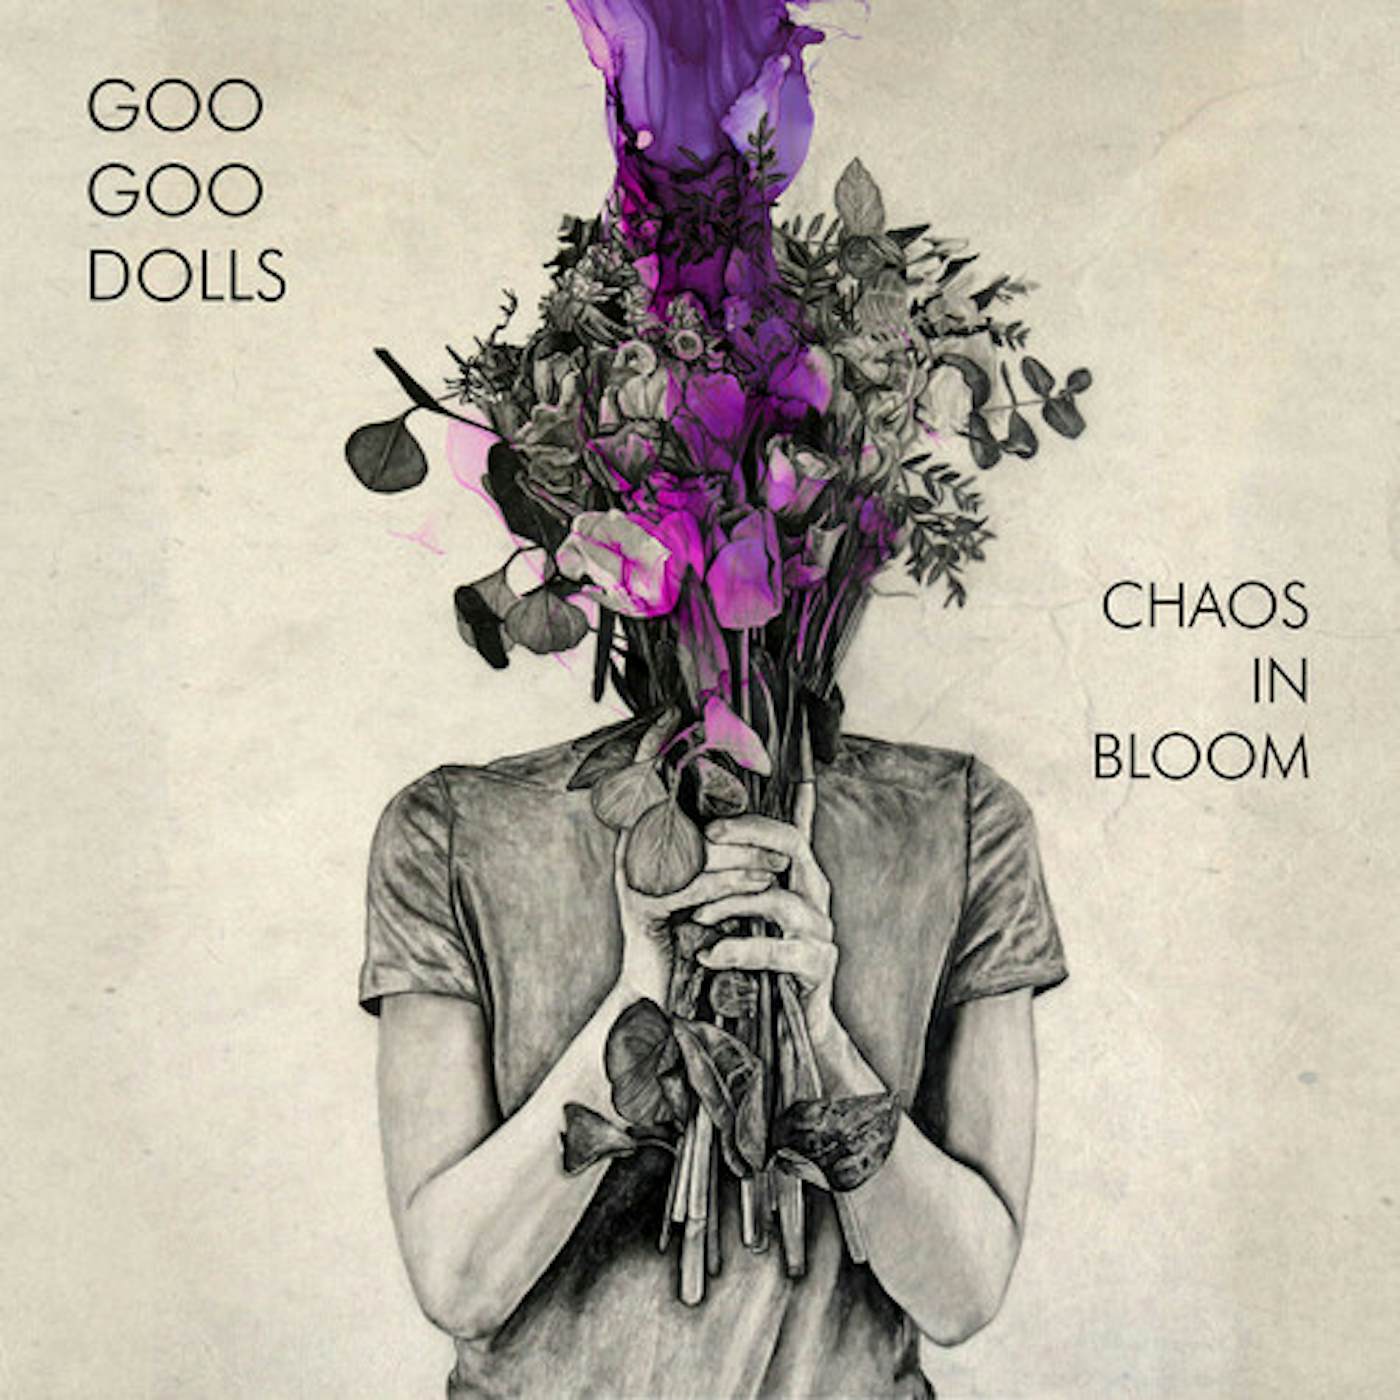 The Goo Goo Dolls Chaos In Bloom Vinyl Record